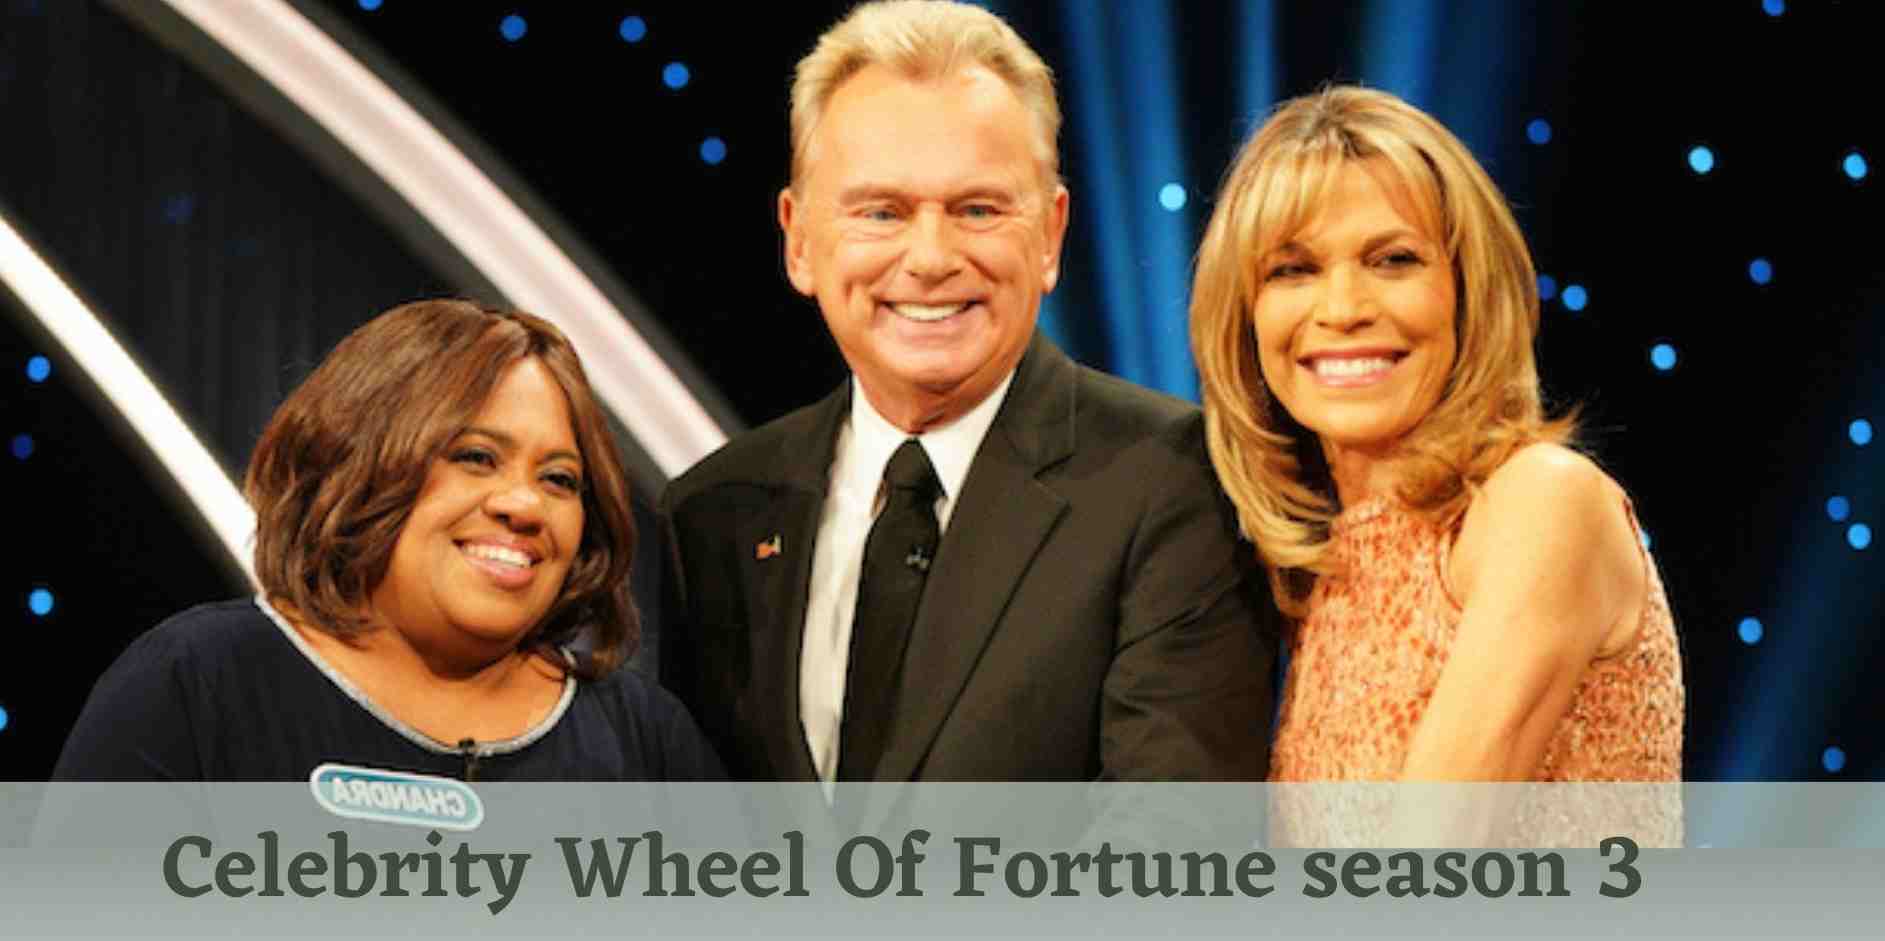 Celebrity Wheel Of Fortune season 3